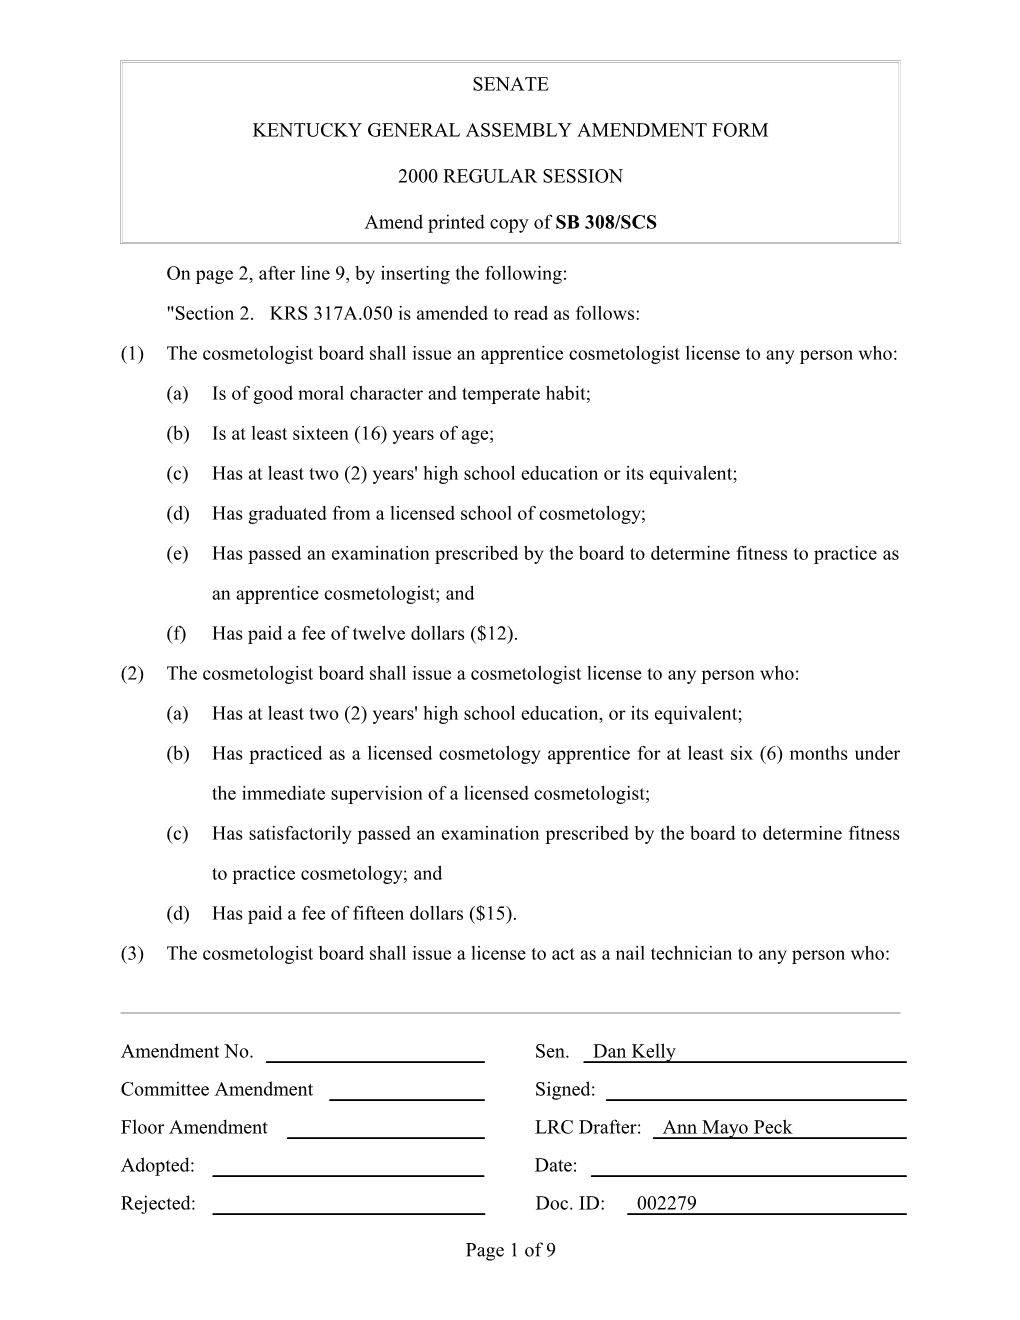 Kentucky General Assembly Amendment Form